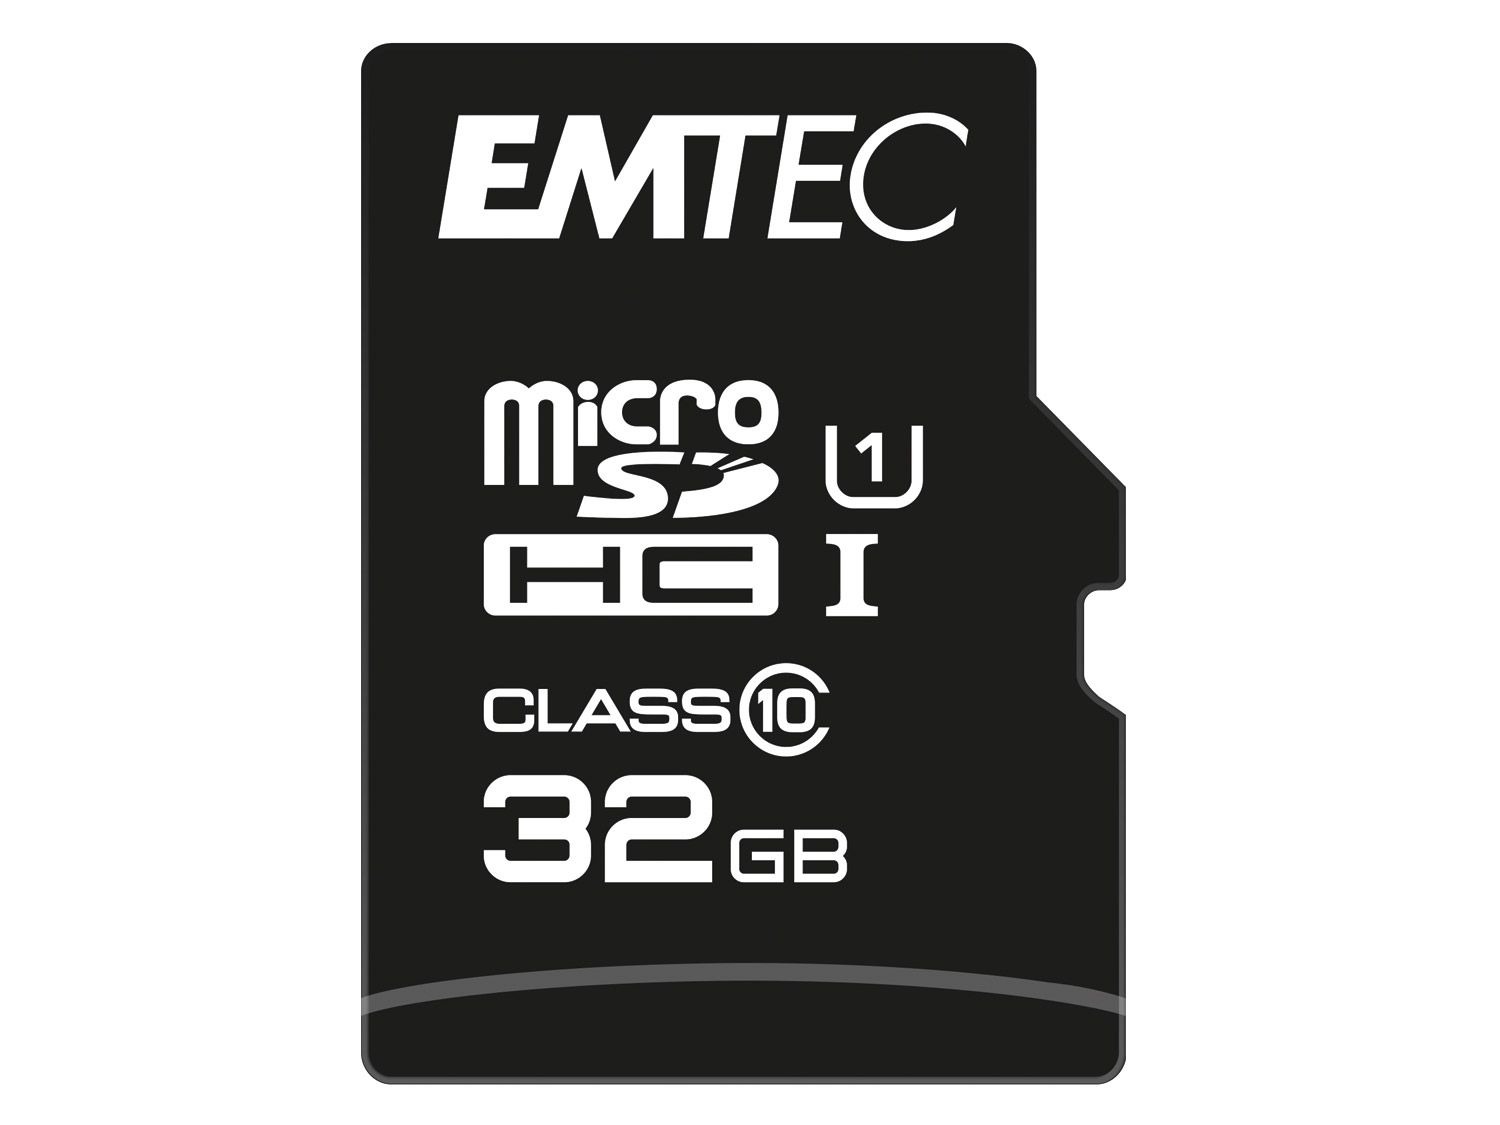 Wrijven Ster vijand Emtec microSDHC UHS1 U1 EliteGold Speicherkarte | LIDL